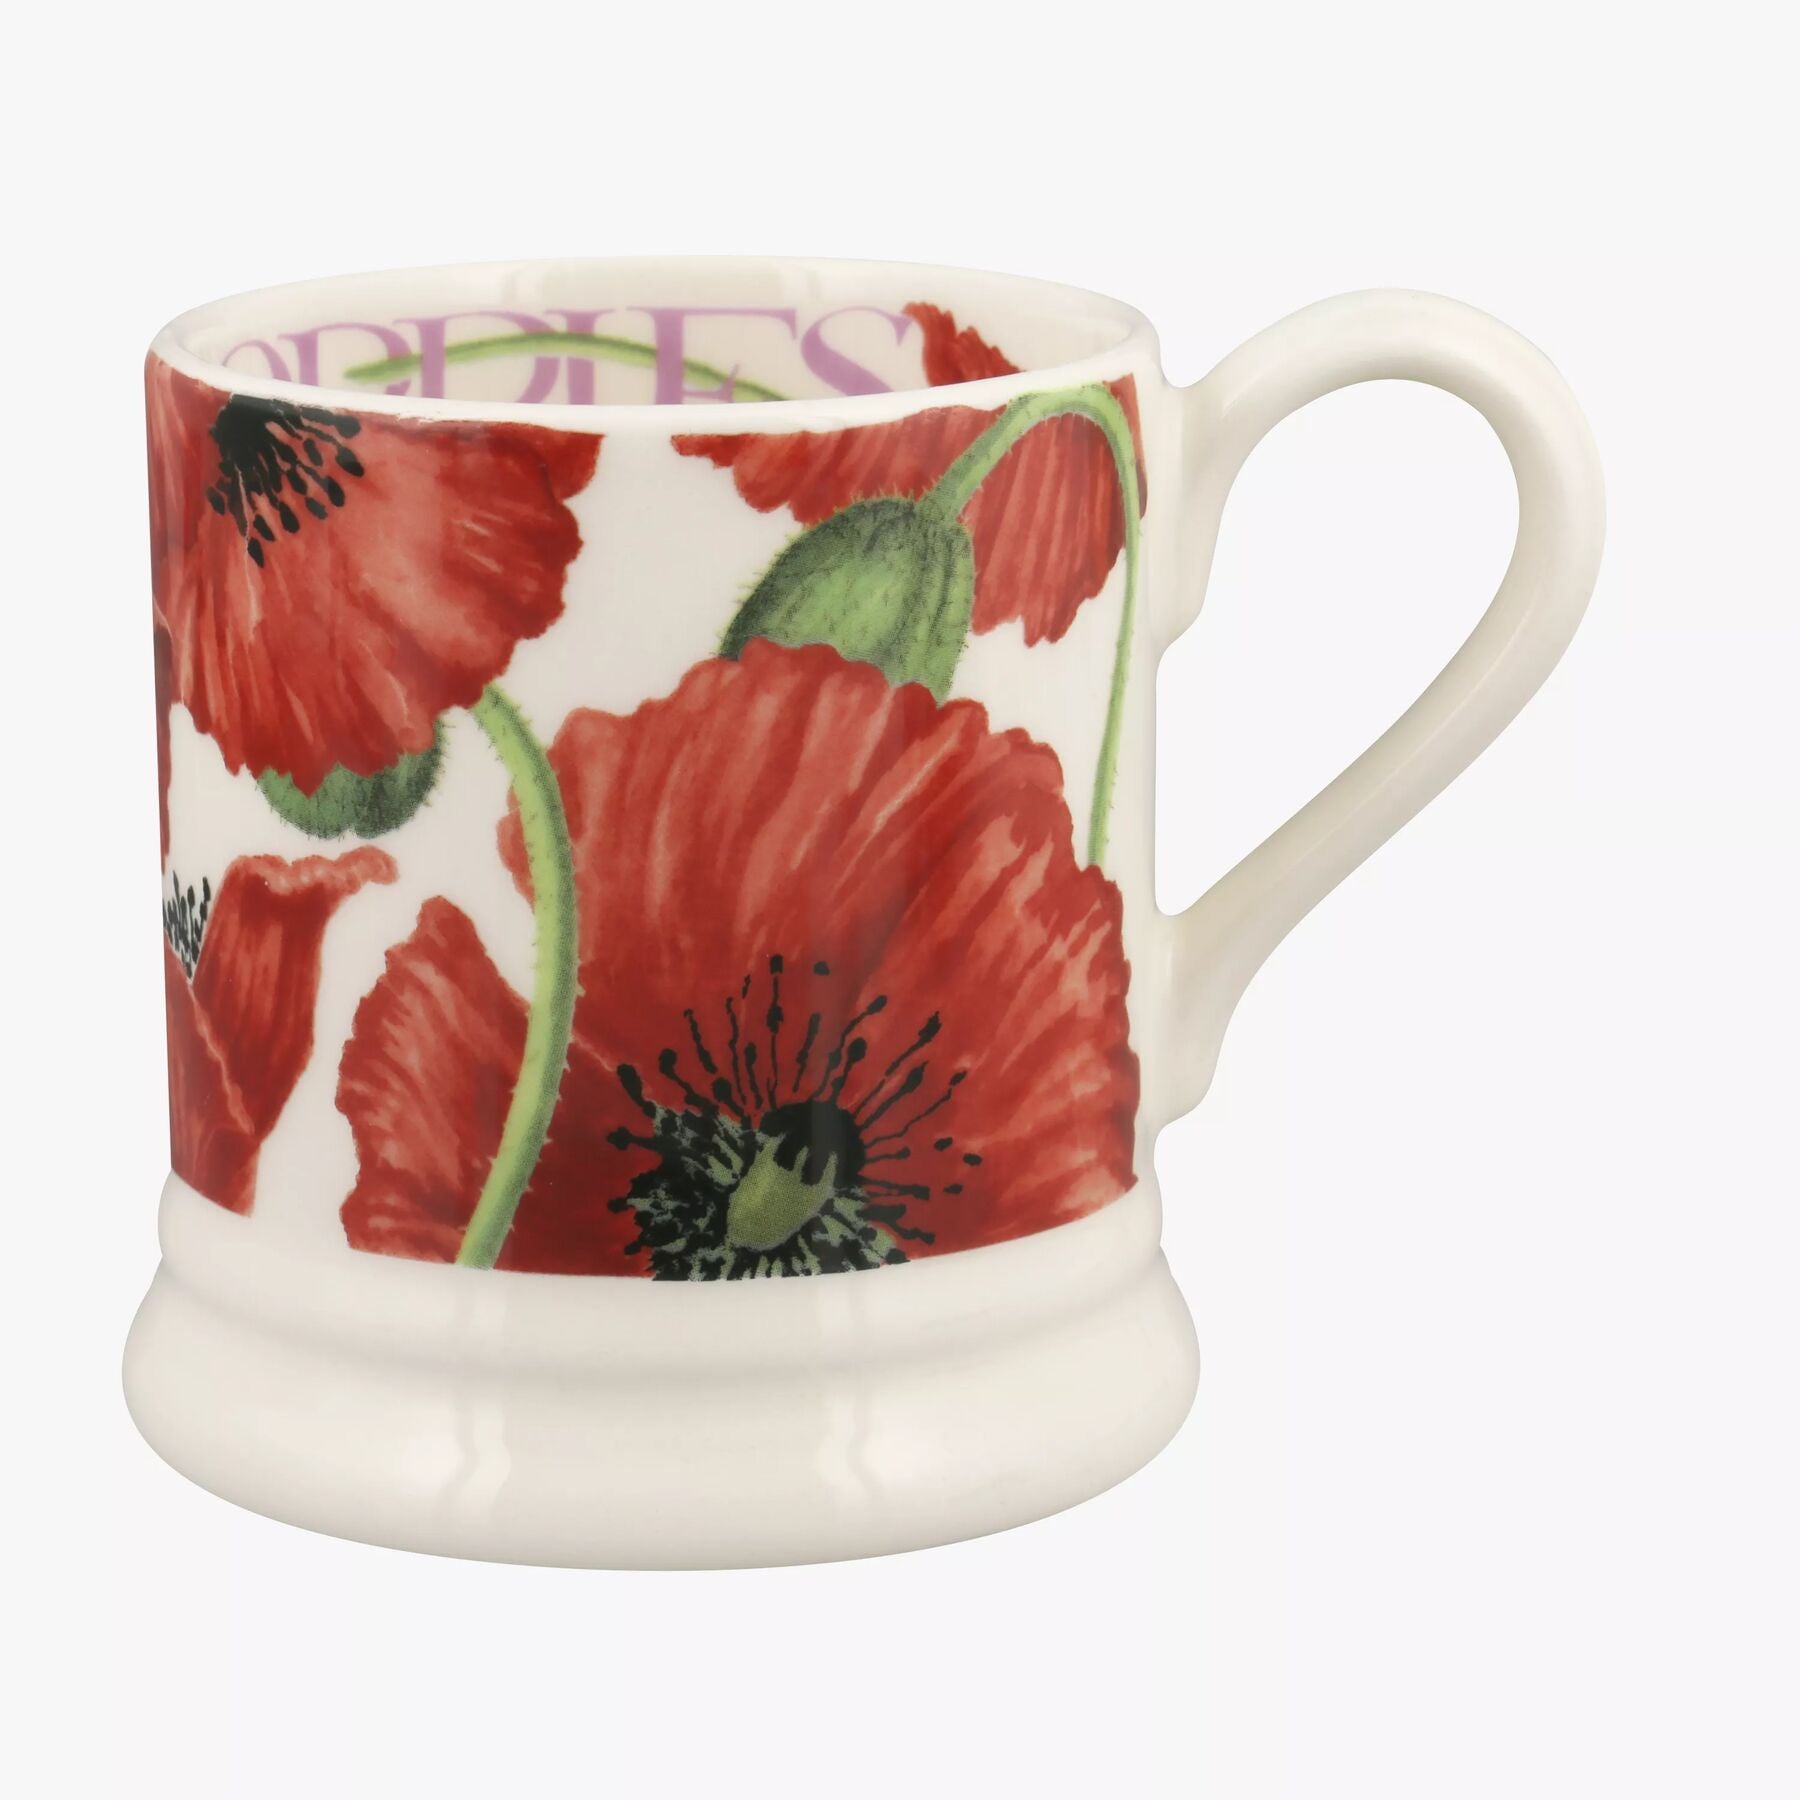 Seconds Red Poppy 1/2 Pint Mug - Unique Handmade & Handpainted English Earthenware Tea/Coffee Mug  |